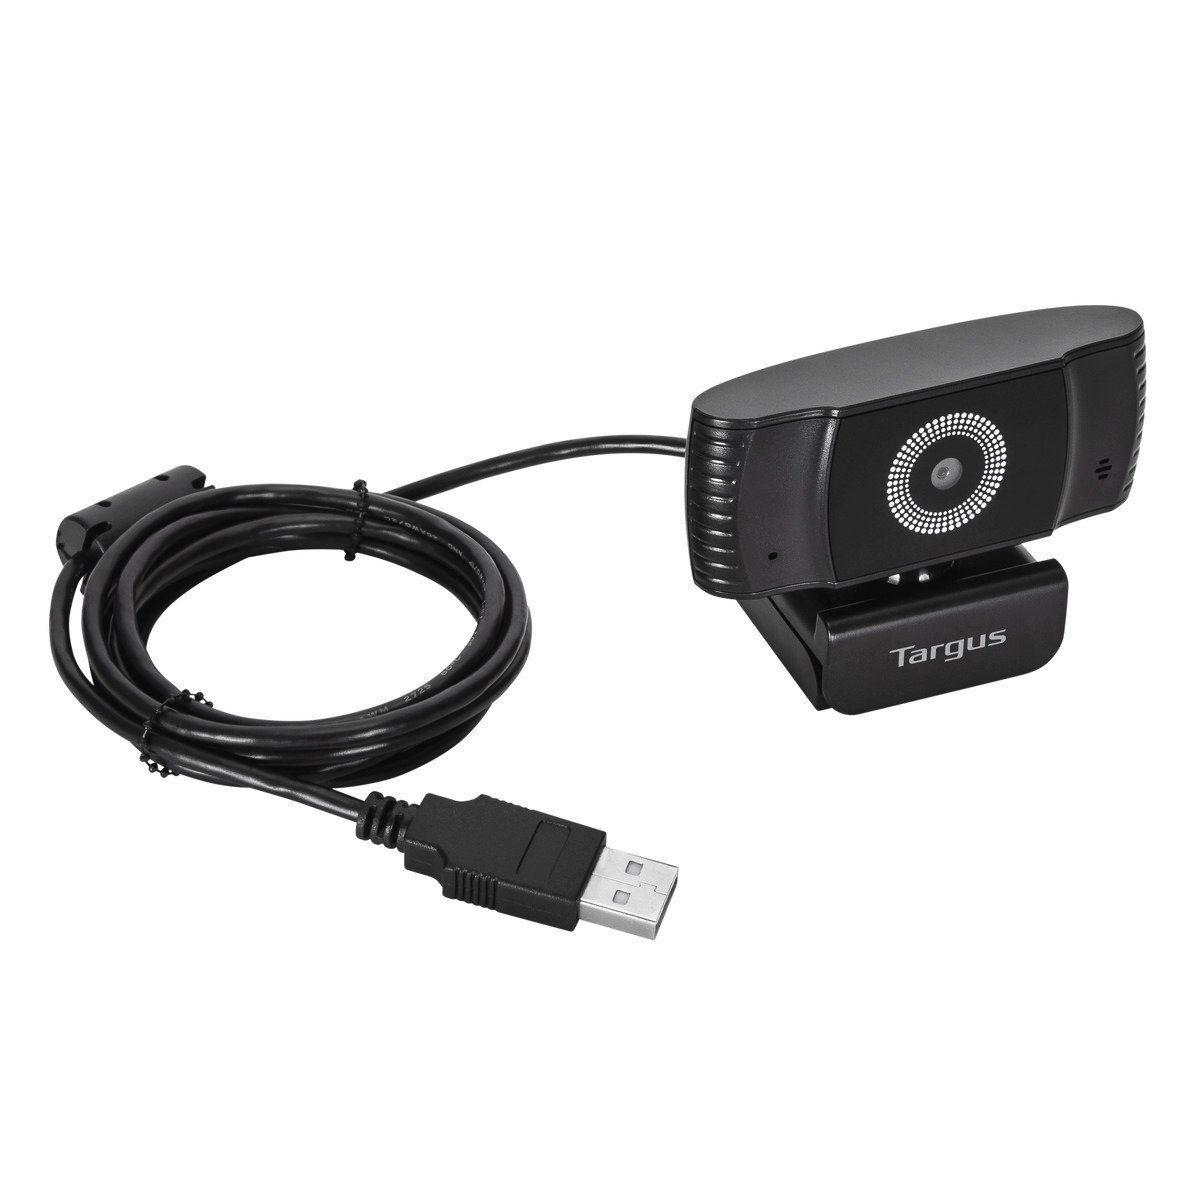 Autofokus Webcam Plus Targus HD mit Webcam Webcam Full